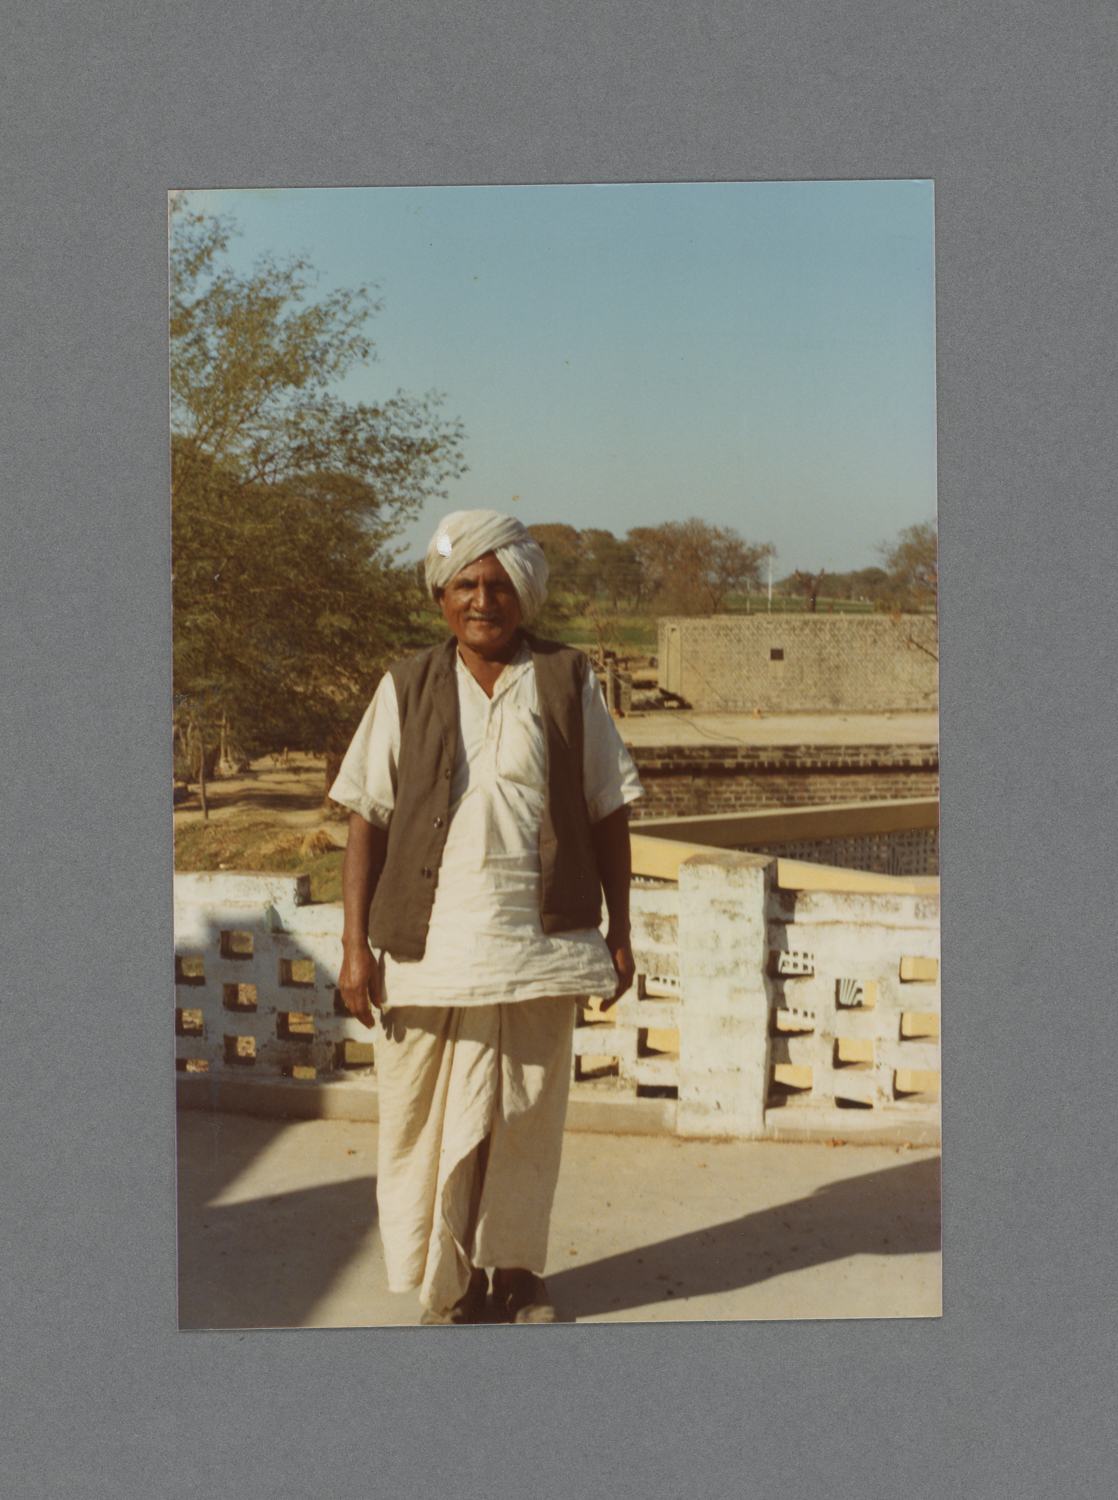 Punjab, India c.1979